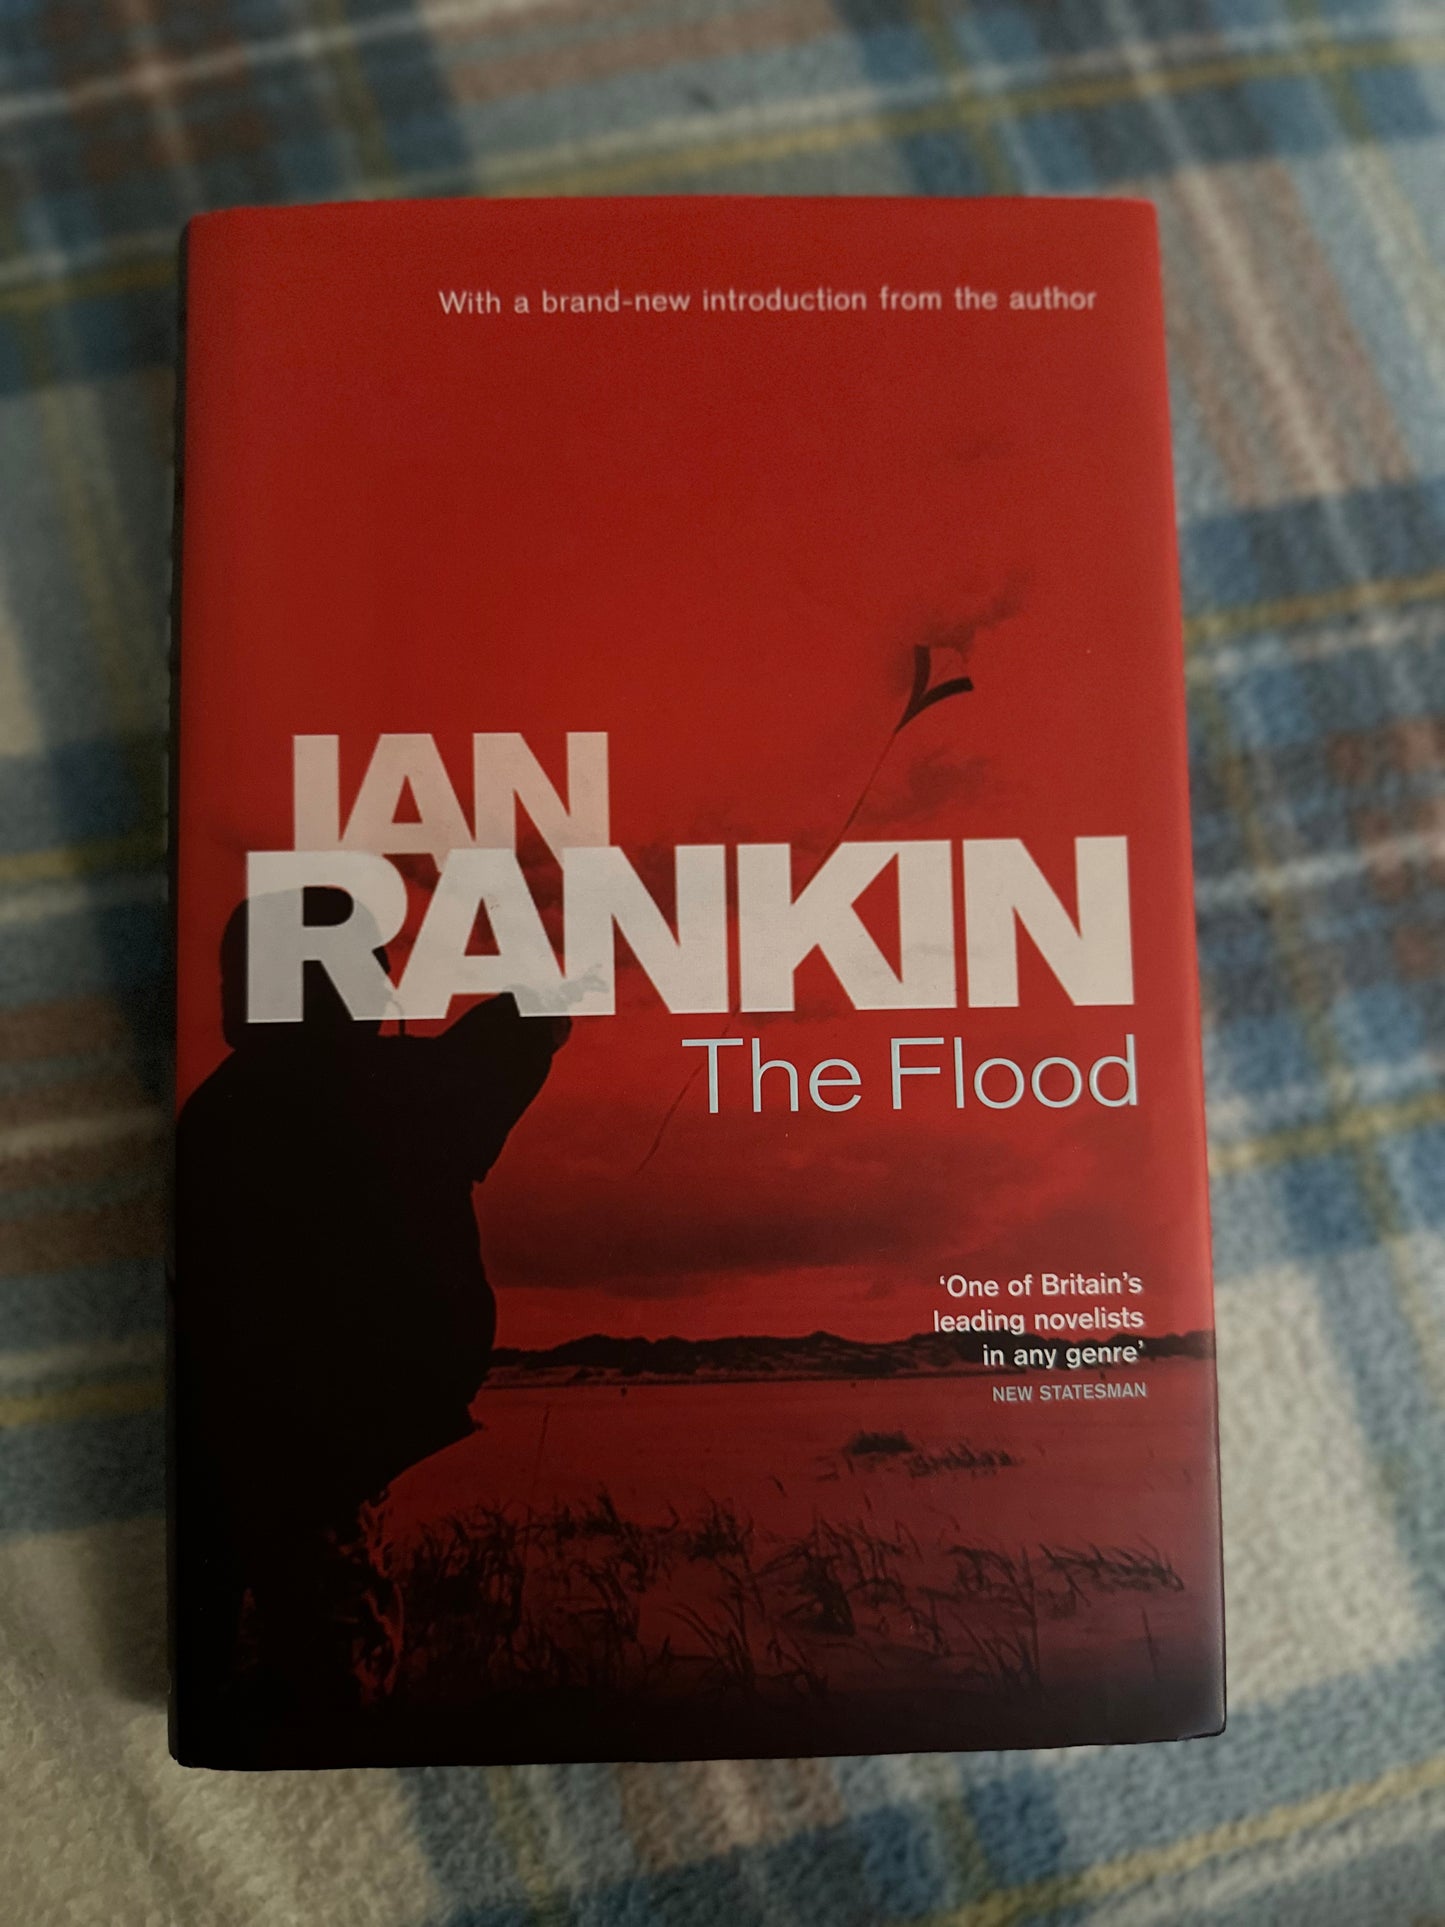 2005 The Flood - Ian Rankin(Orion Publishers)